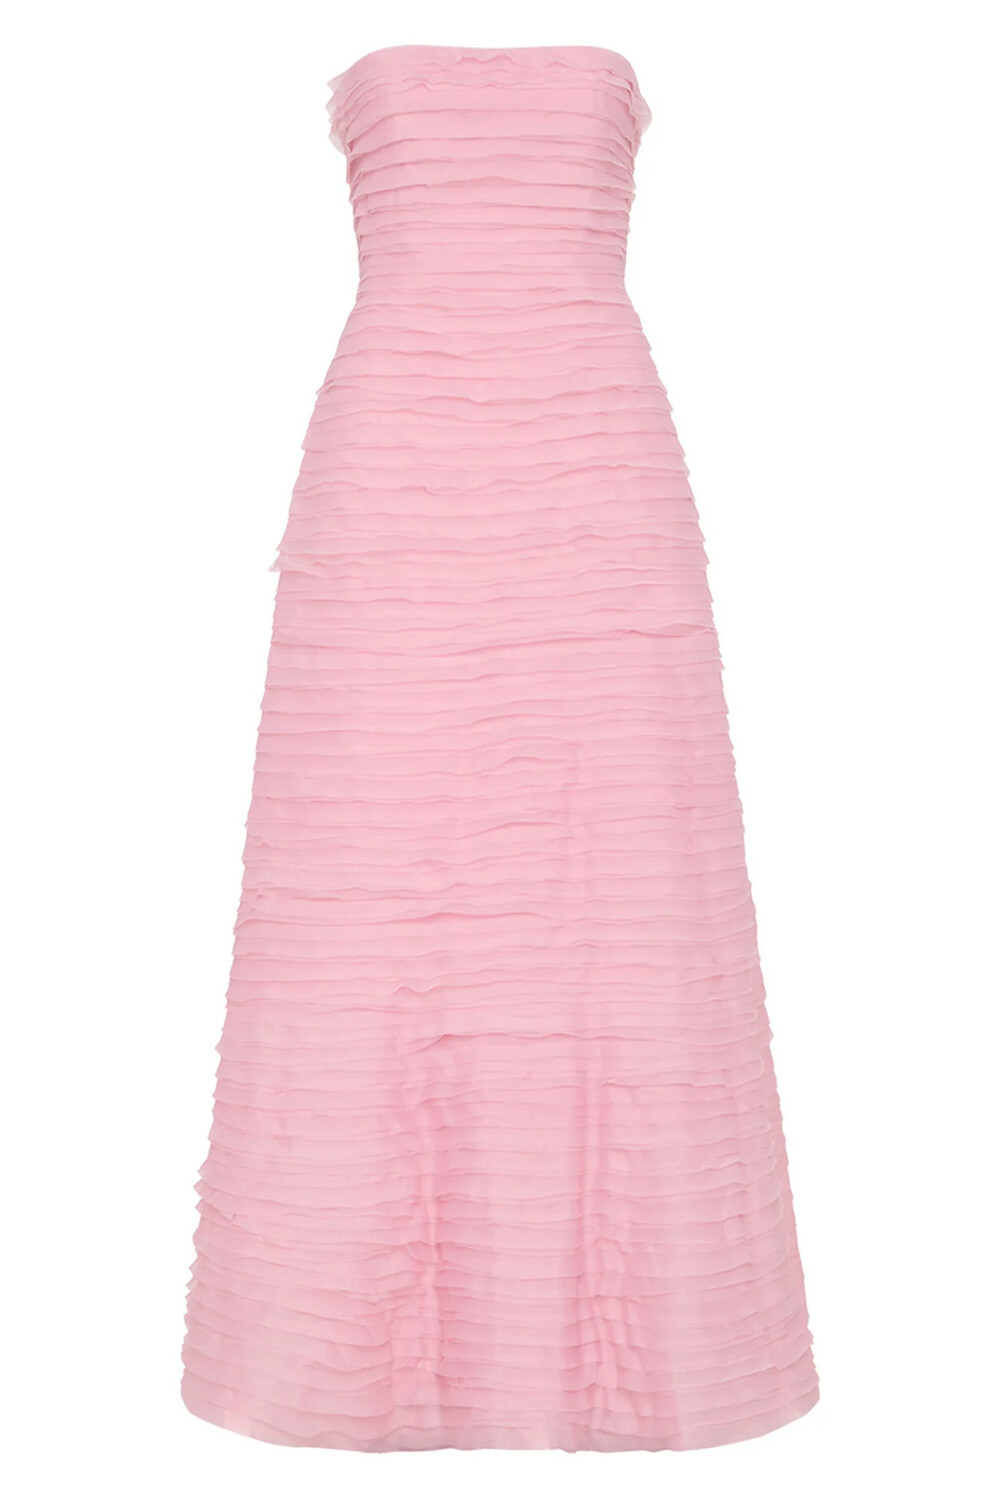 Aje Soundscape Maxi Dress in Chalk Pink